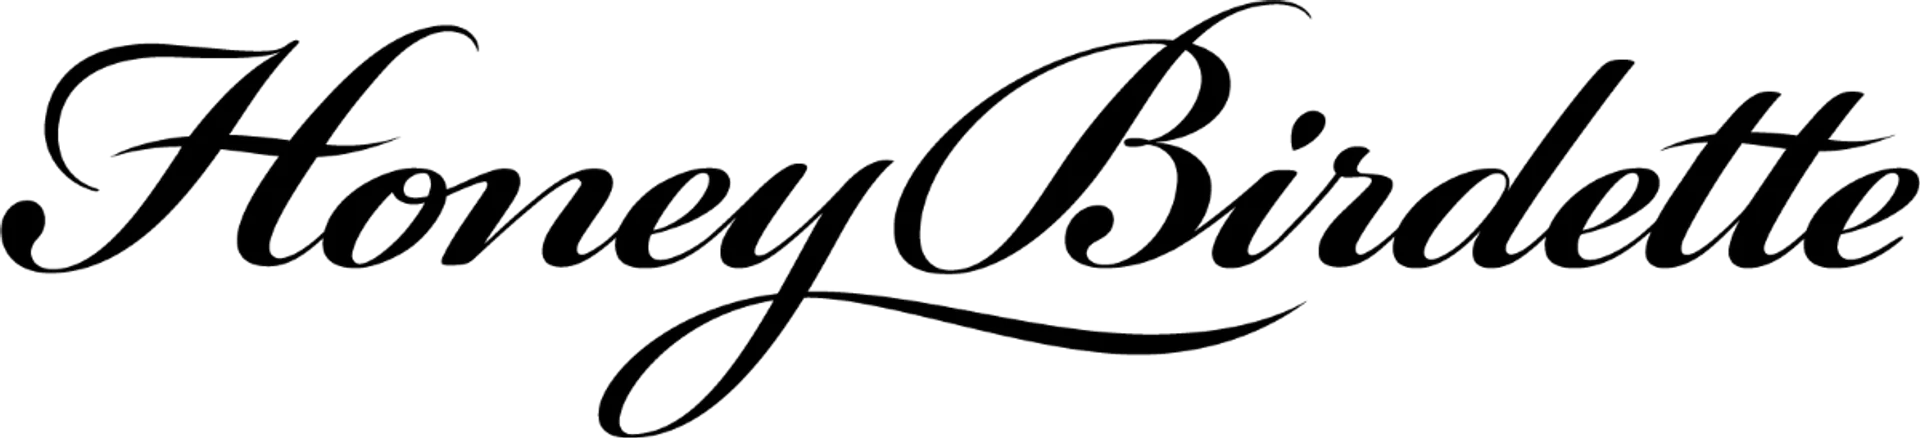 HONEY BIRDETTE logo of current catalogue